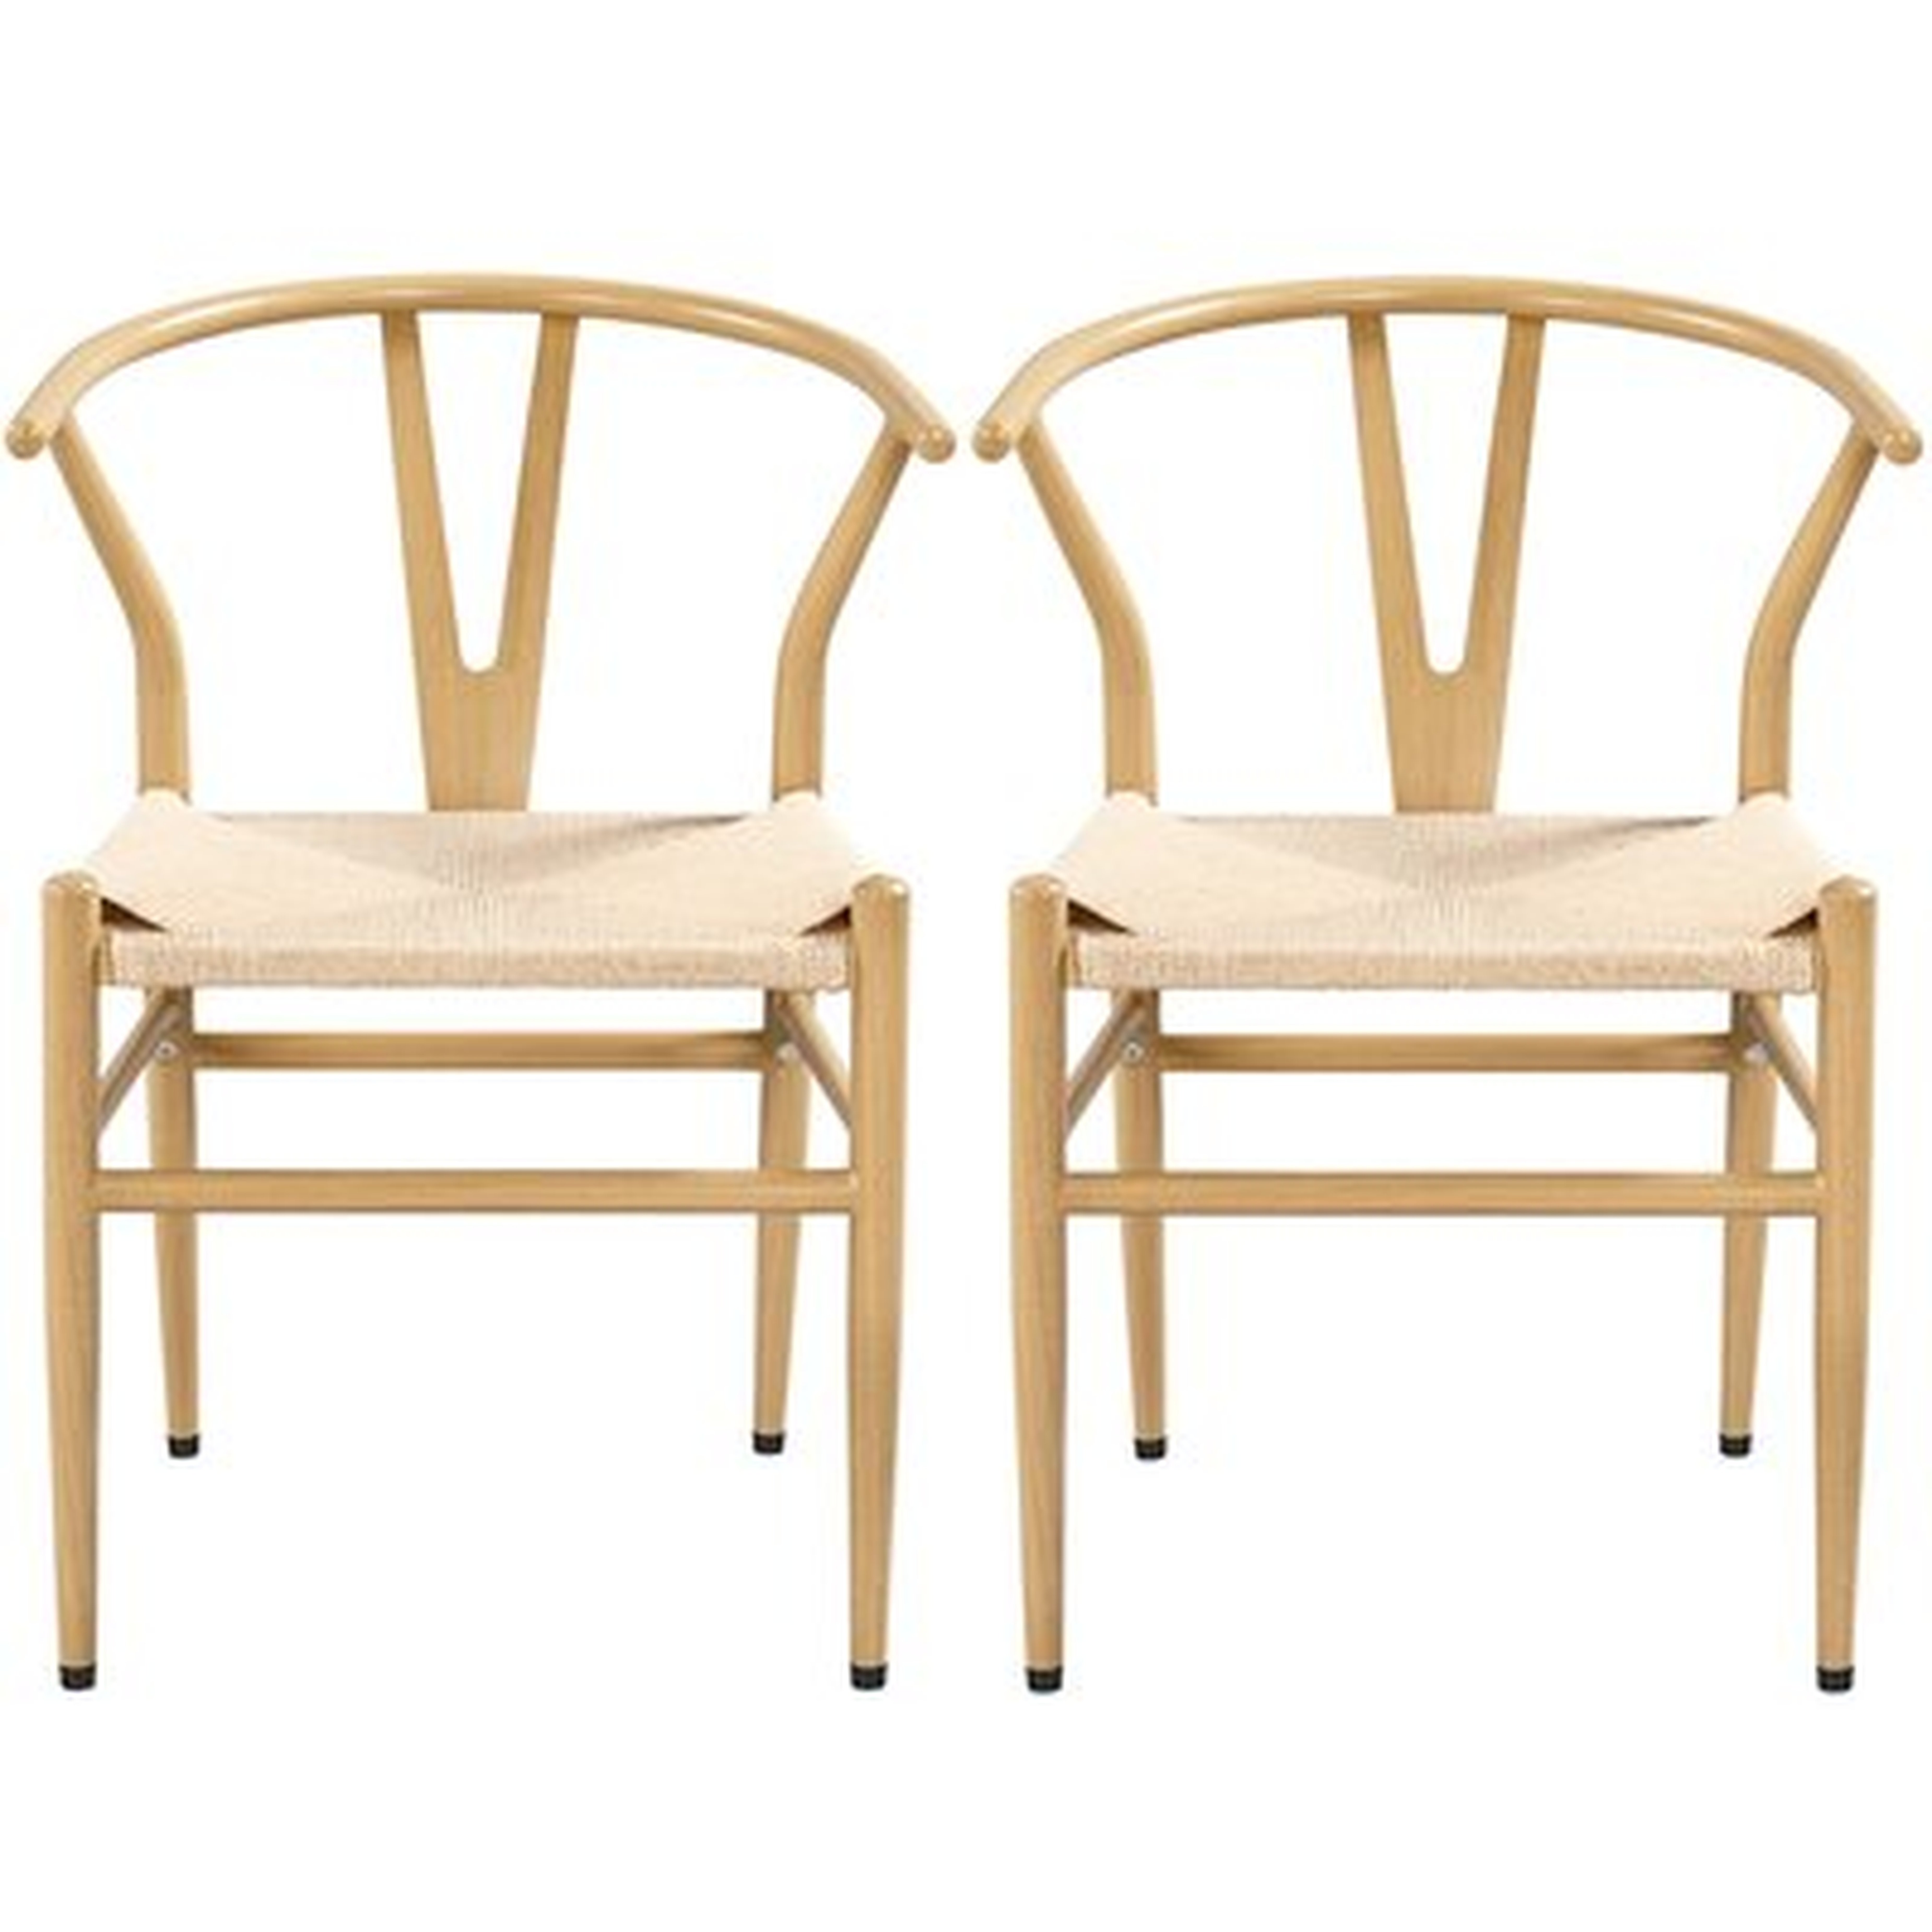 Mid-Century Metal Dining Chair Weave Seat (Set of 2) - Wayfair